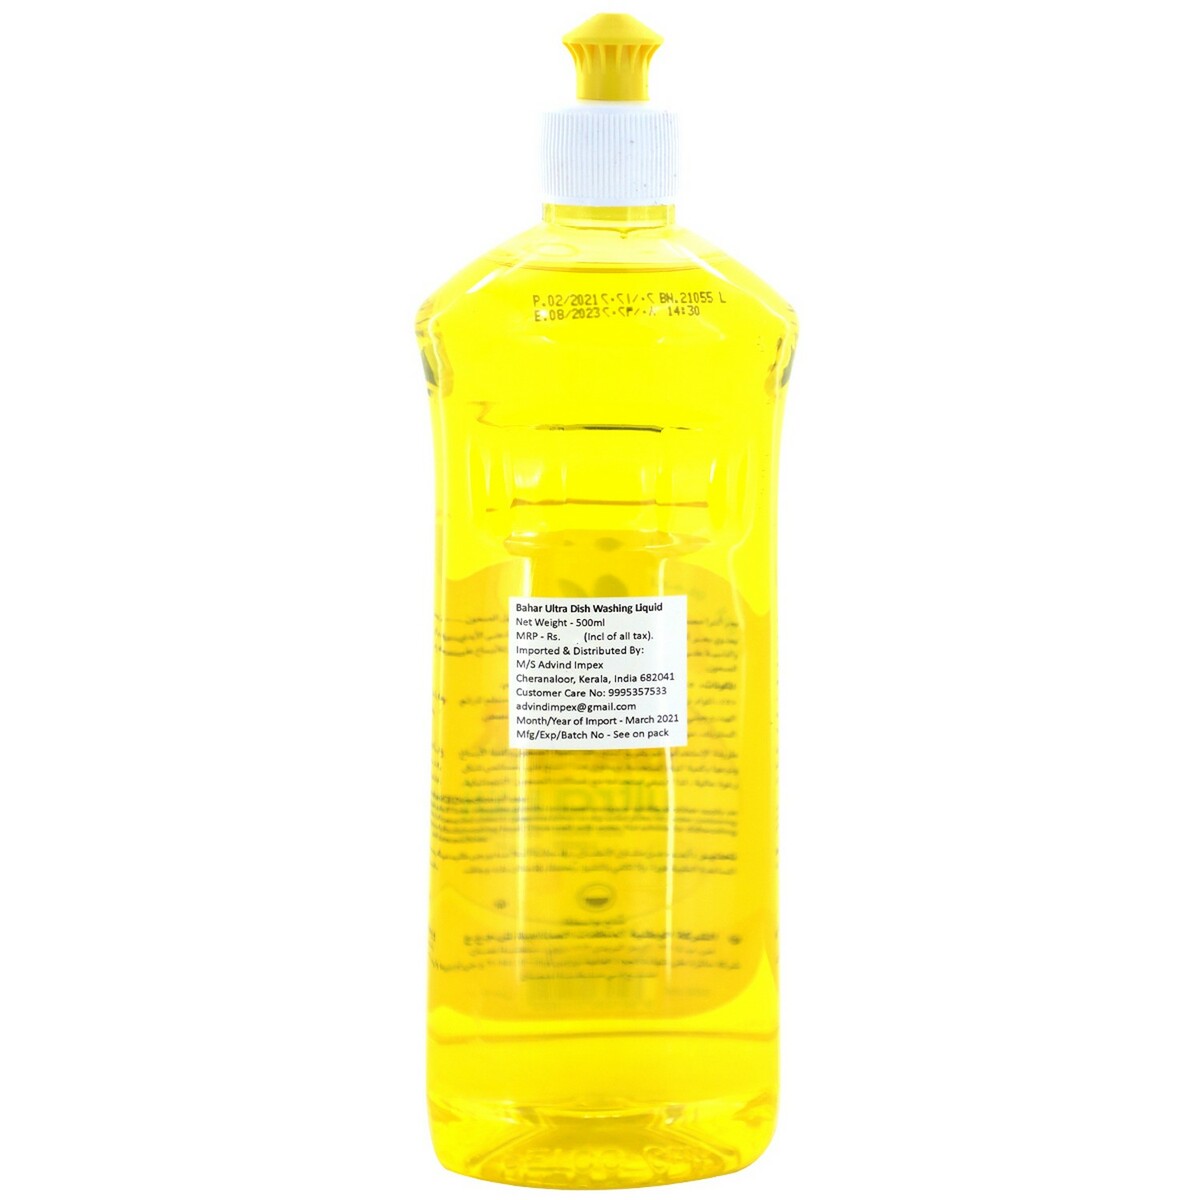 Bahar Ultra Dishwash Liquid  Lemon 500ml